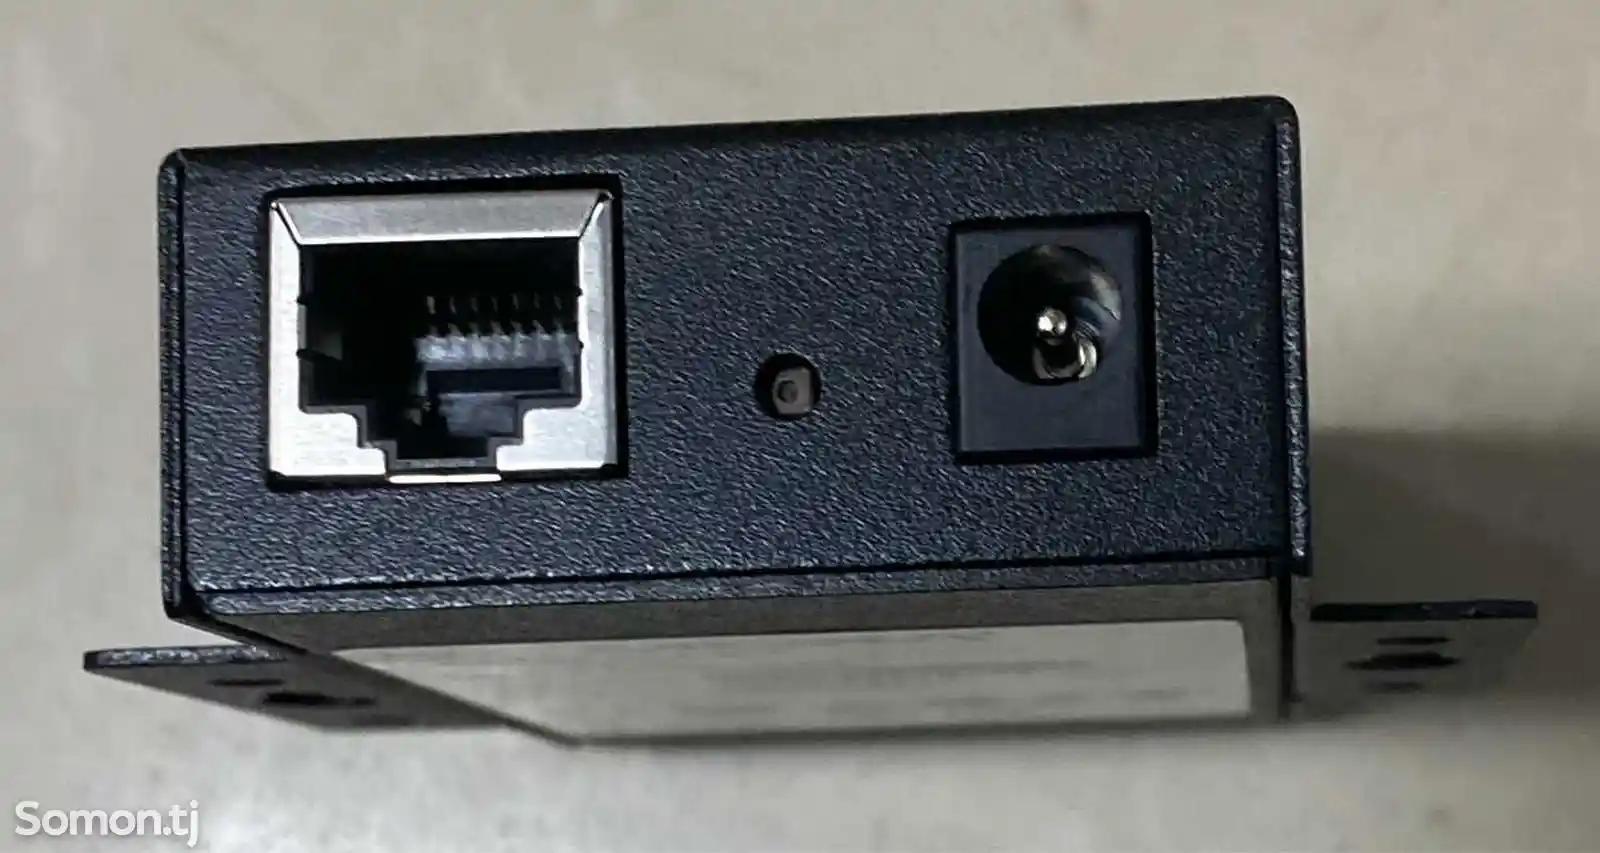 Nport 5110 RS-232 в Ethernet-3